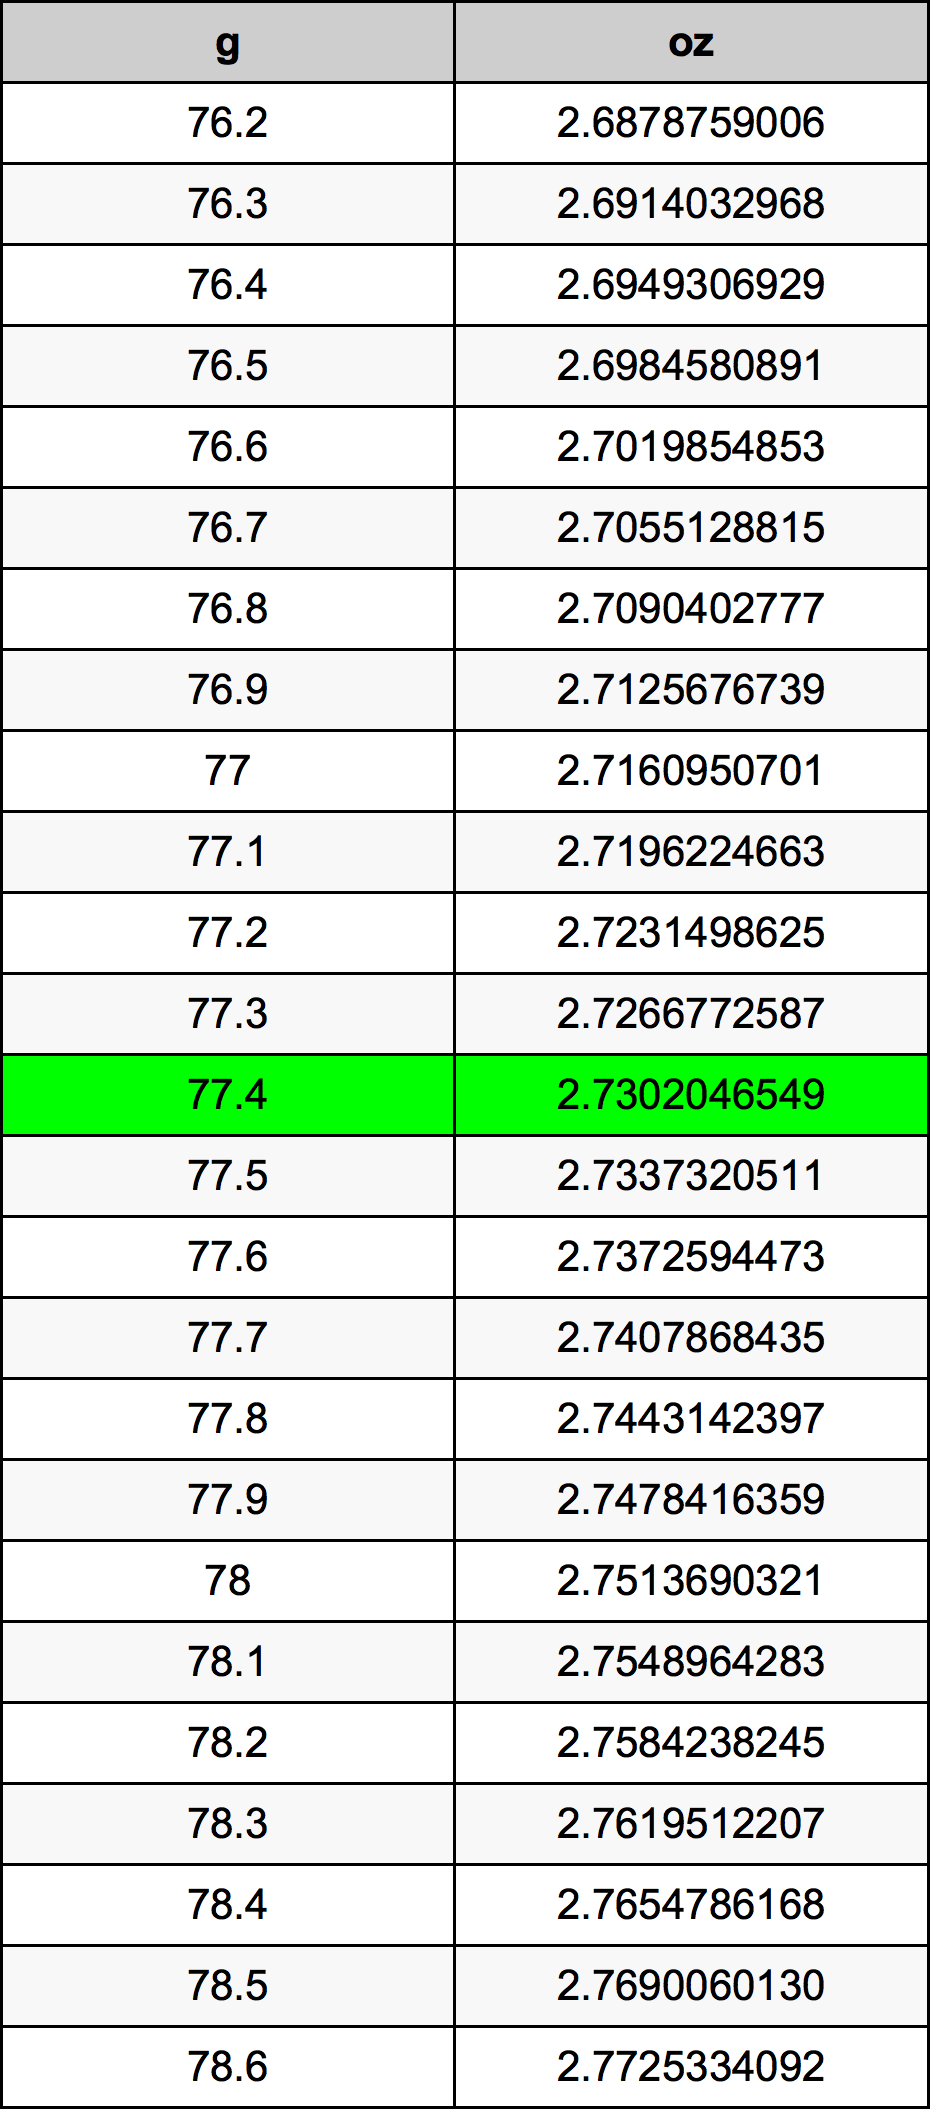 77.4 غرام جدول تحويل